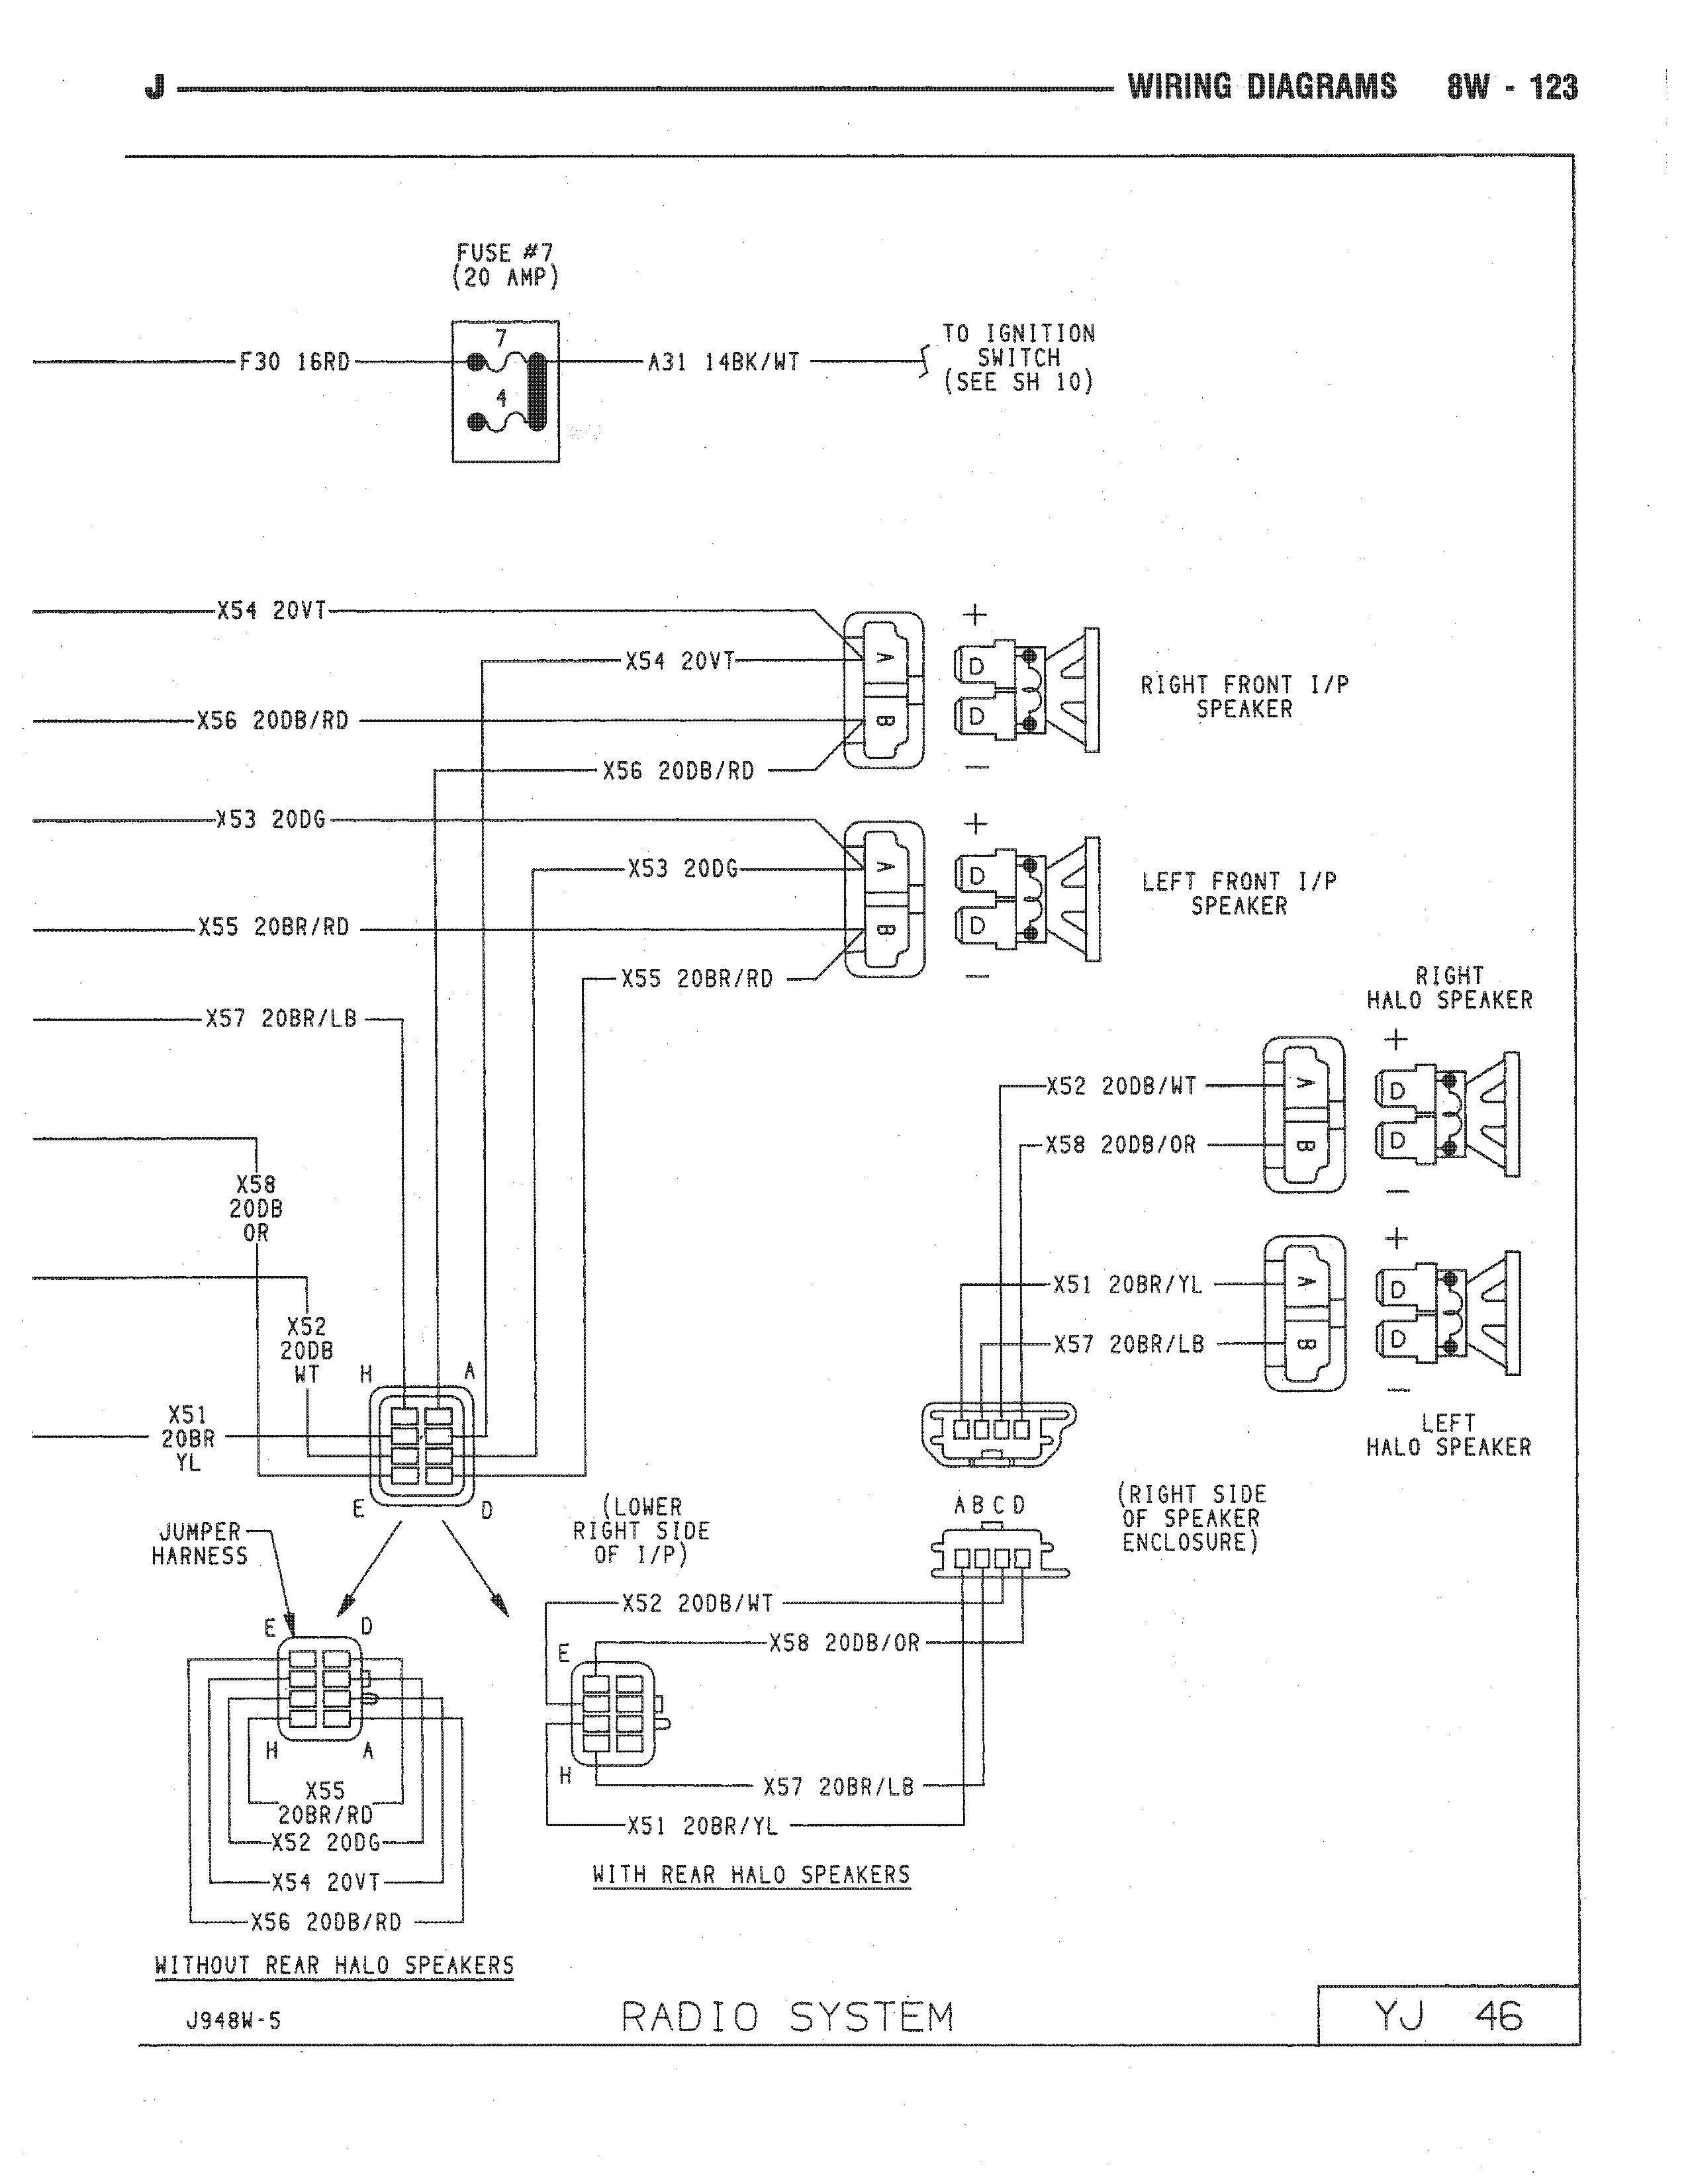 chrysler stereo wiring harness diagram wiring diagram database wiring diagram in addition 2007 jeep wrangler radio printable wiring